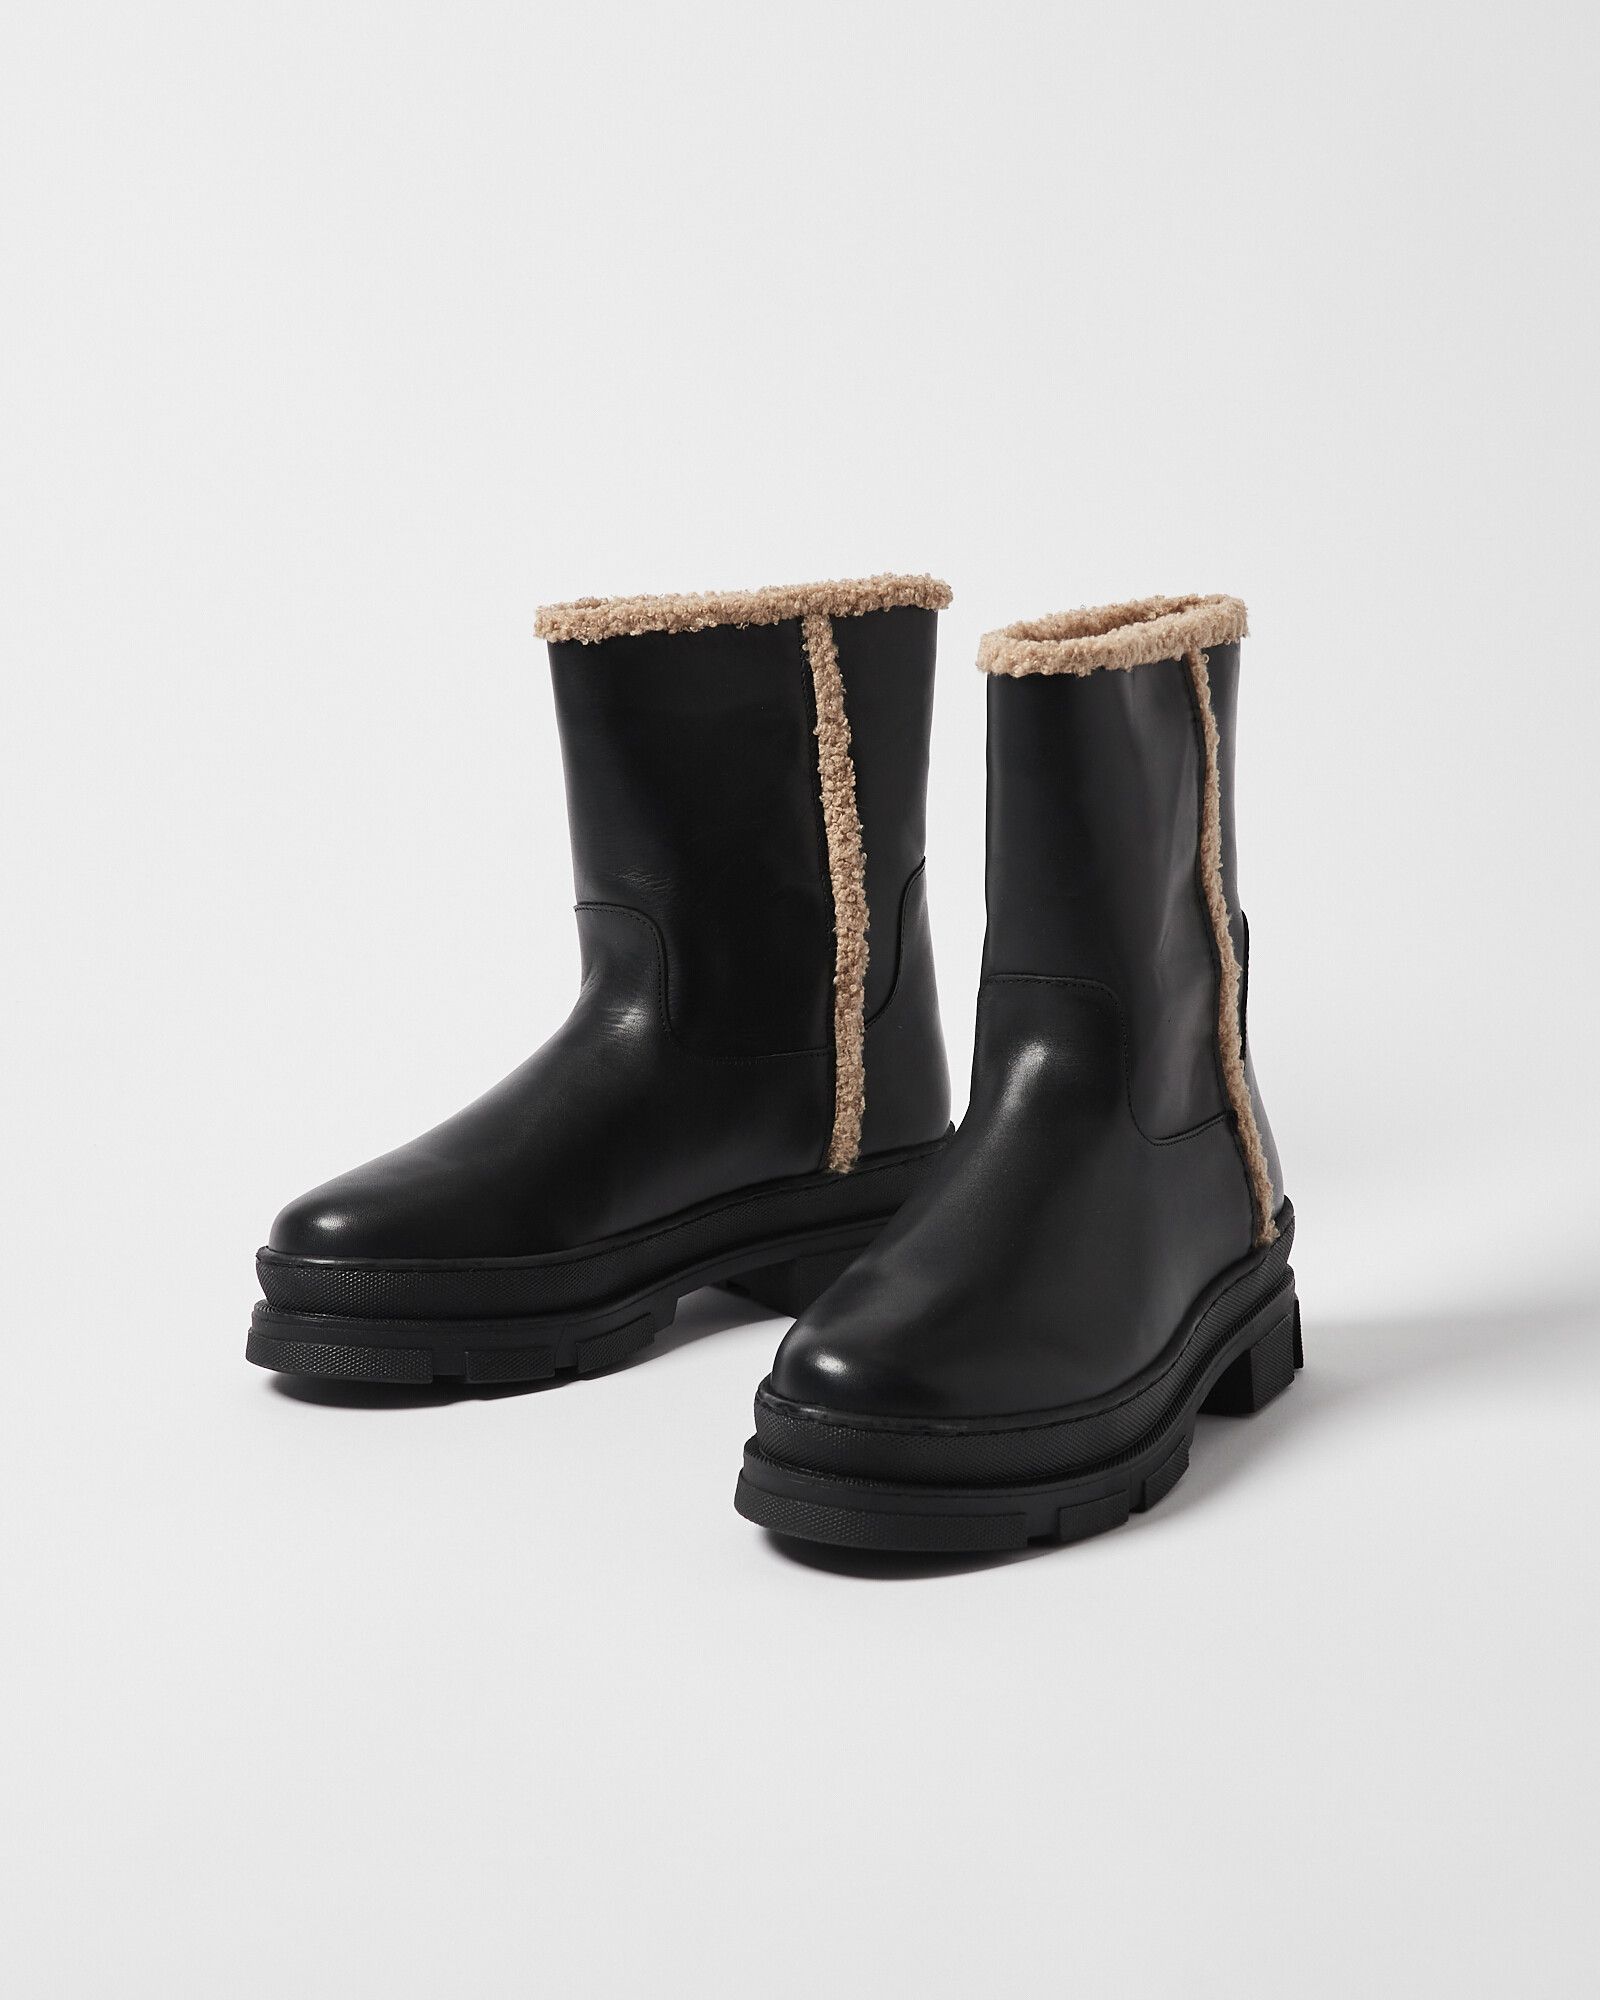 Shoe The Bear Olga Pull On Black Leather Boots | Oliver Bonas